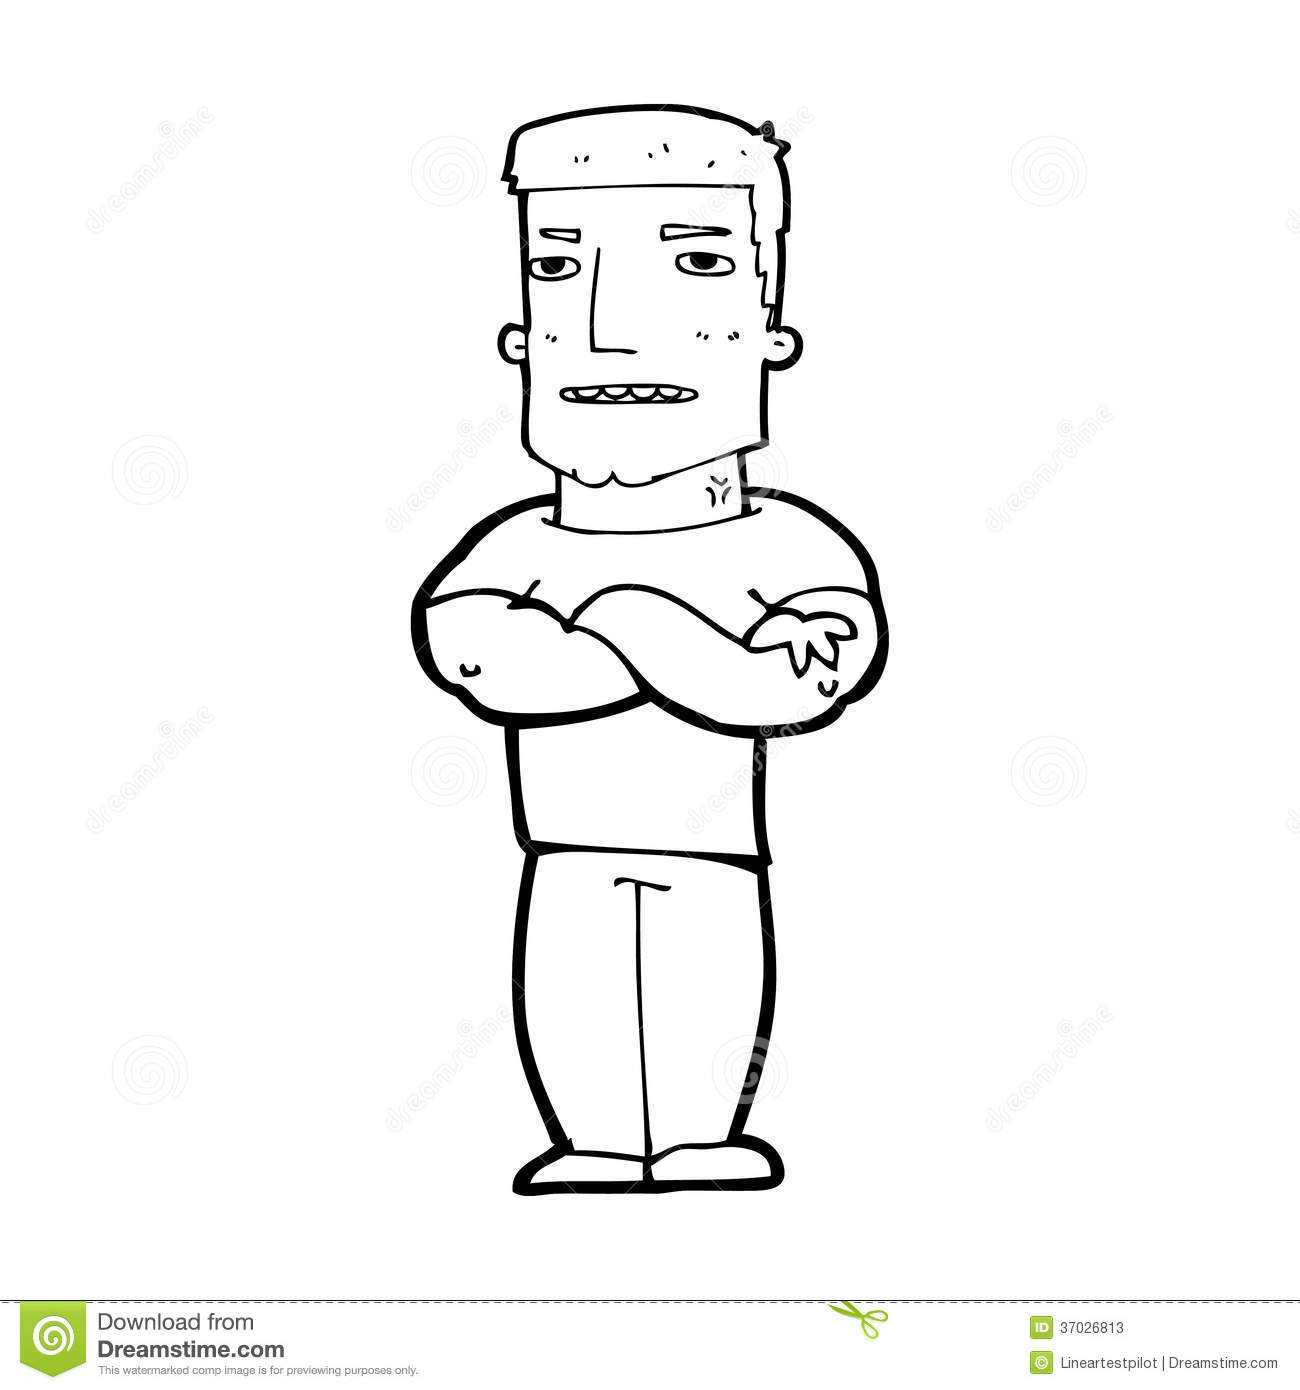 Cartoon Tough Guy With Folded Arms Stock Photos   Image  37026813